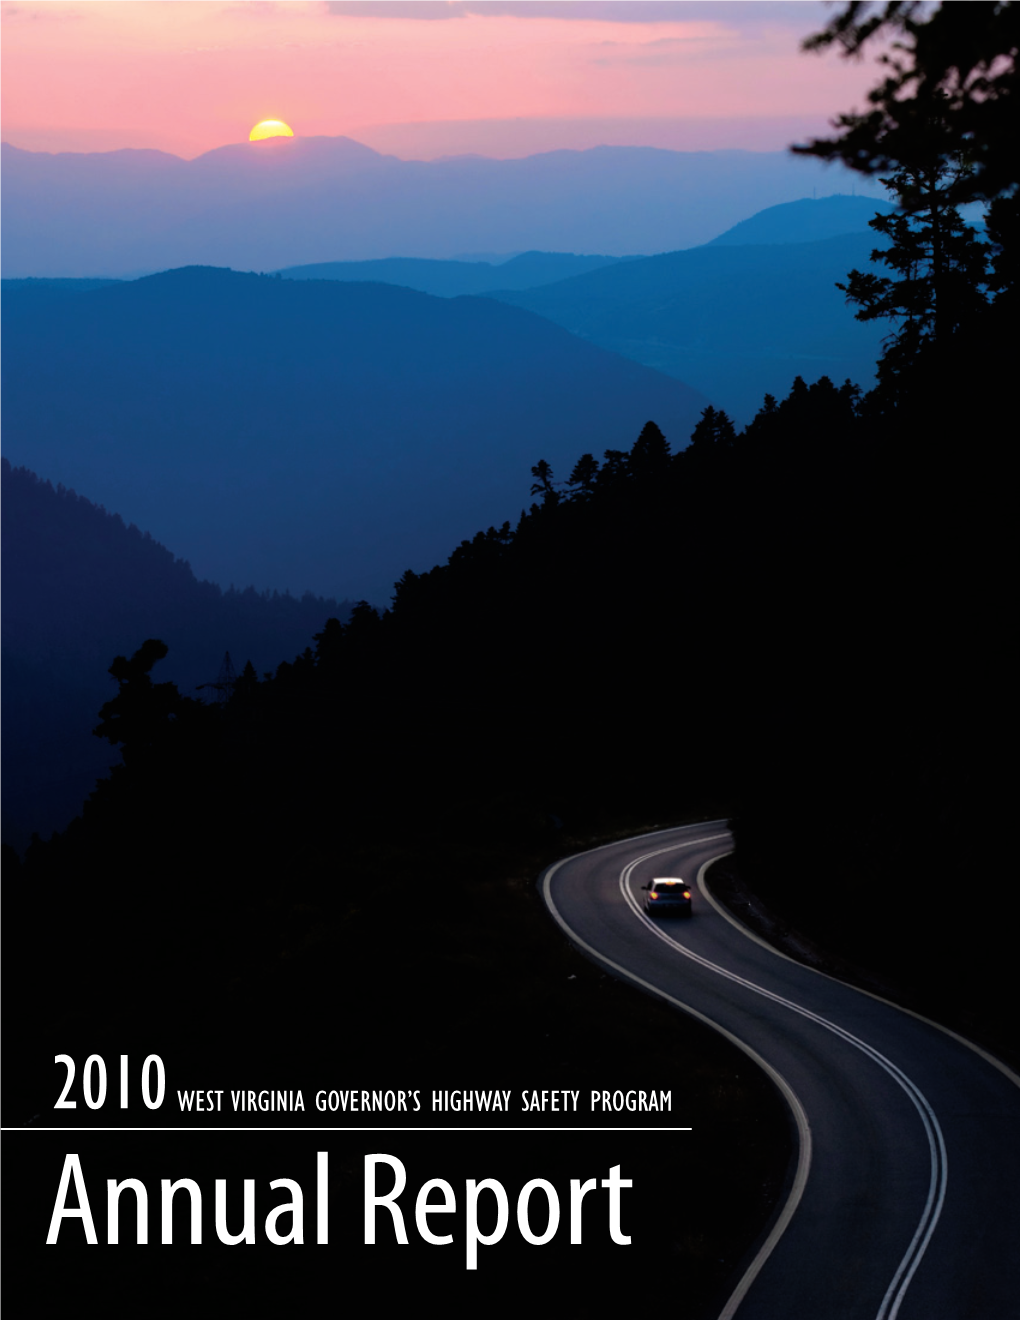 West Virginia Governor's Highway Safety Program